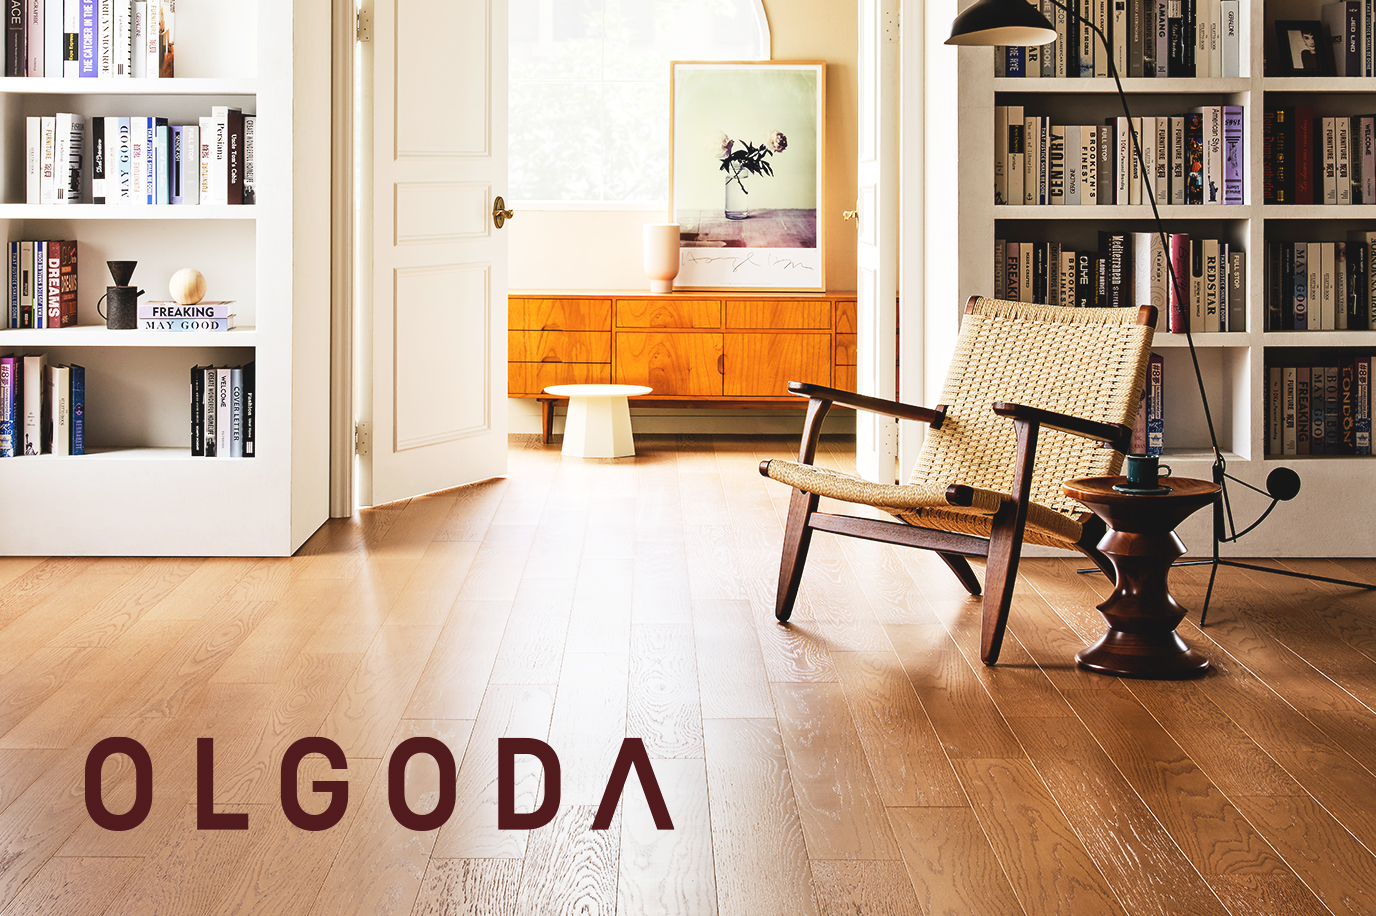 OLGODA Branding and Launching Communication